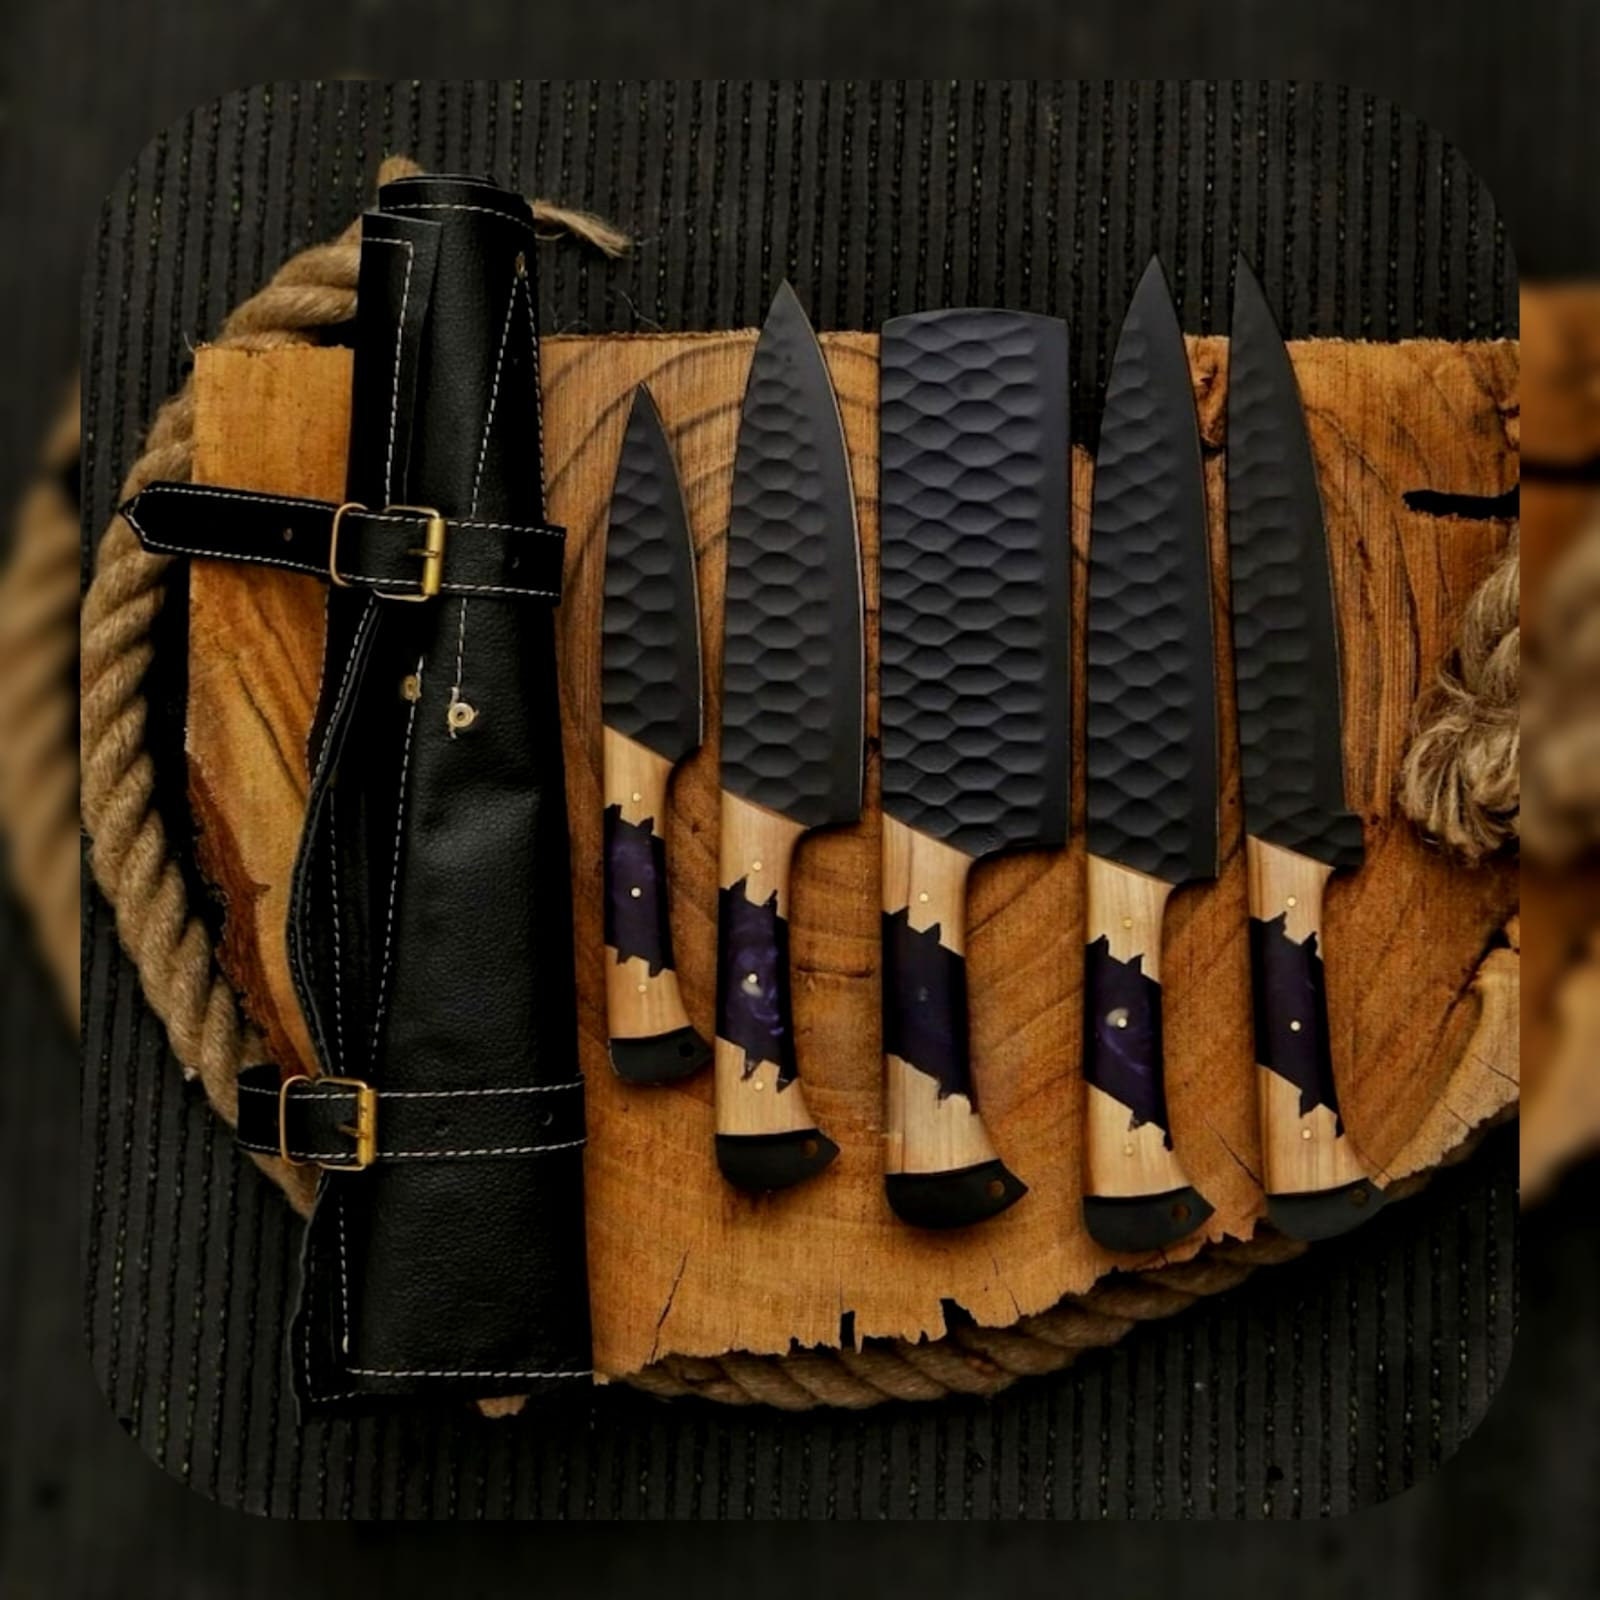 Gander Mountain 6 piece knife set / camping set New!!